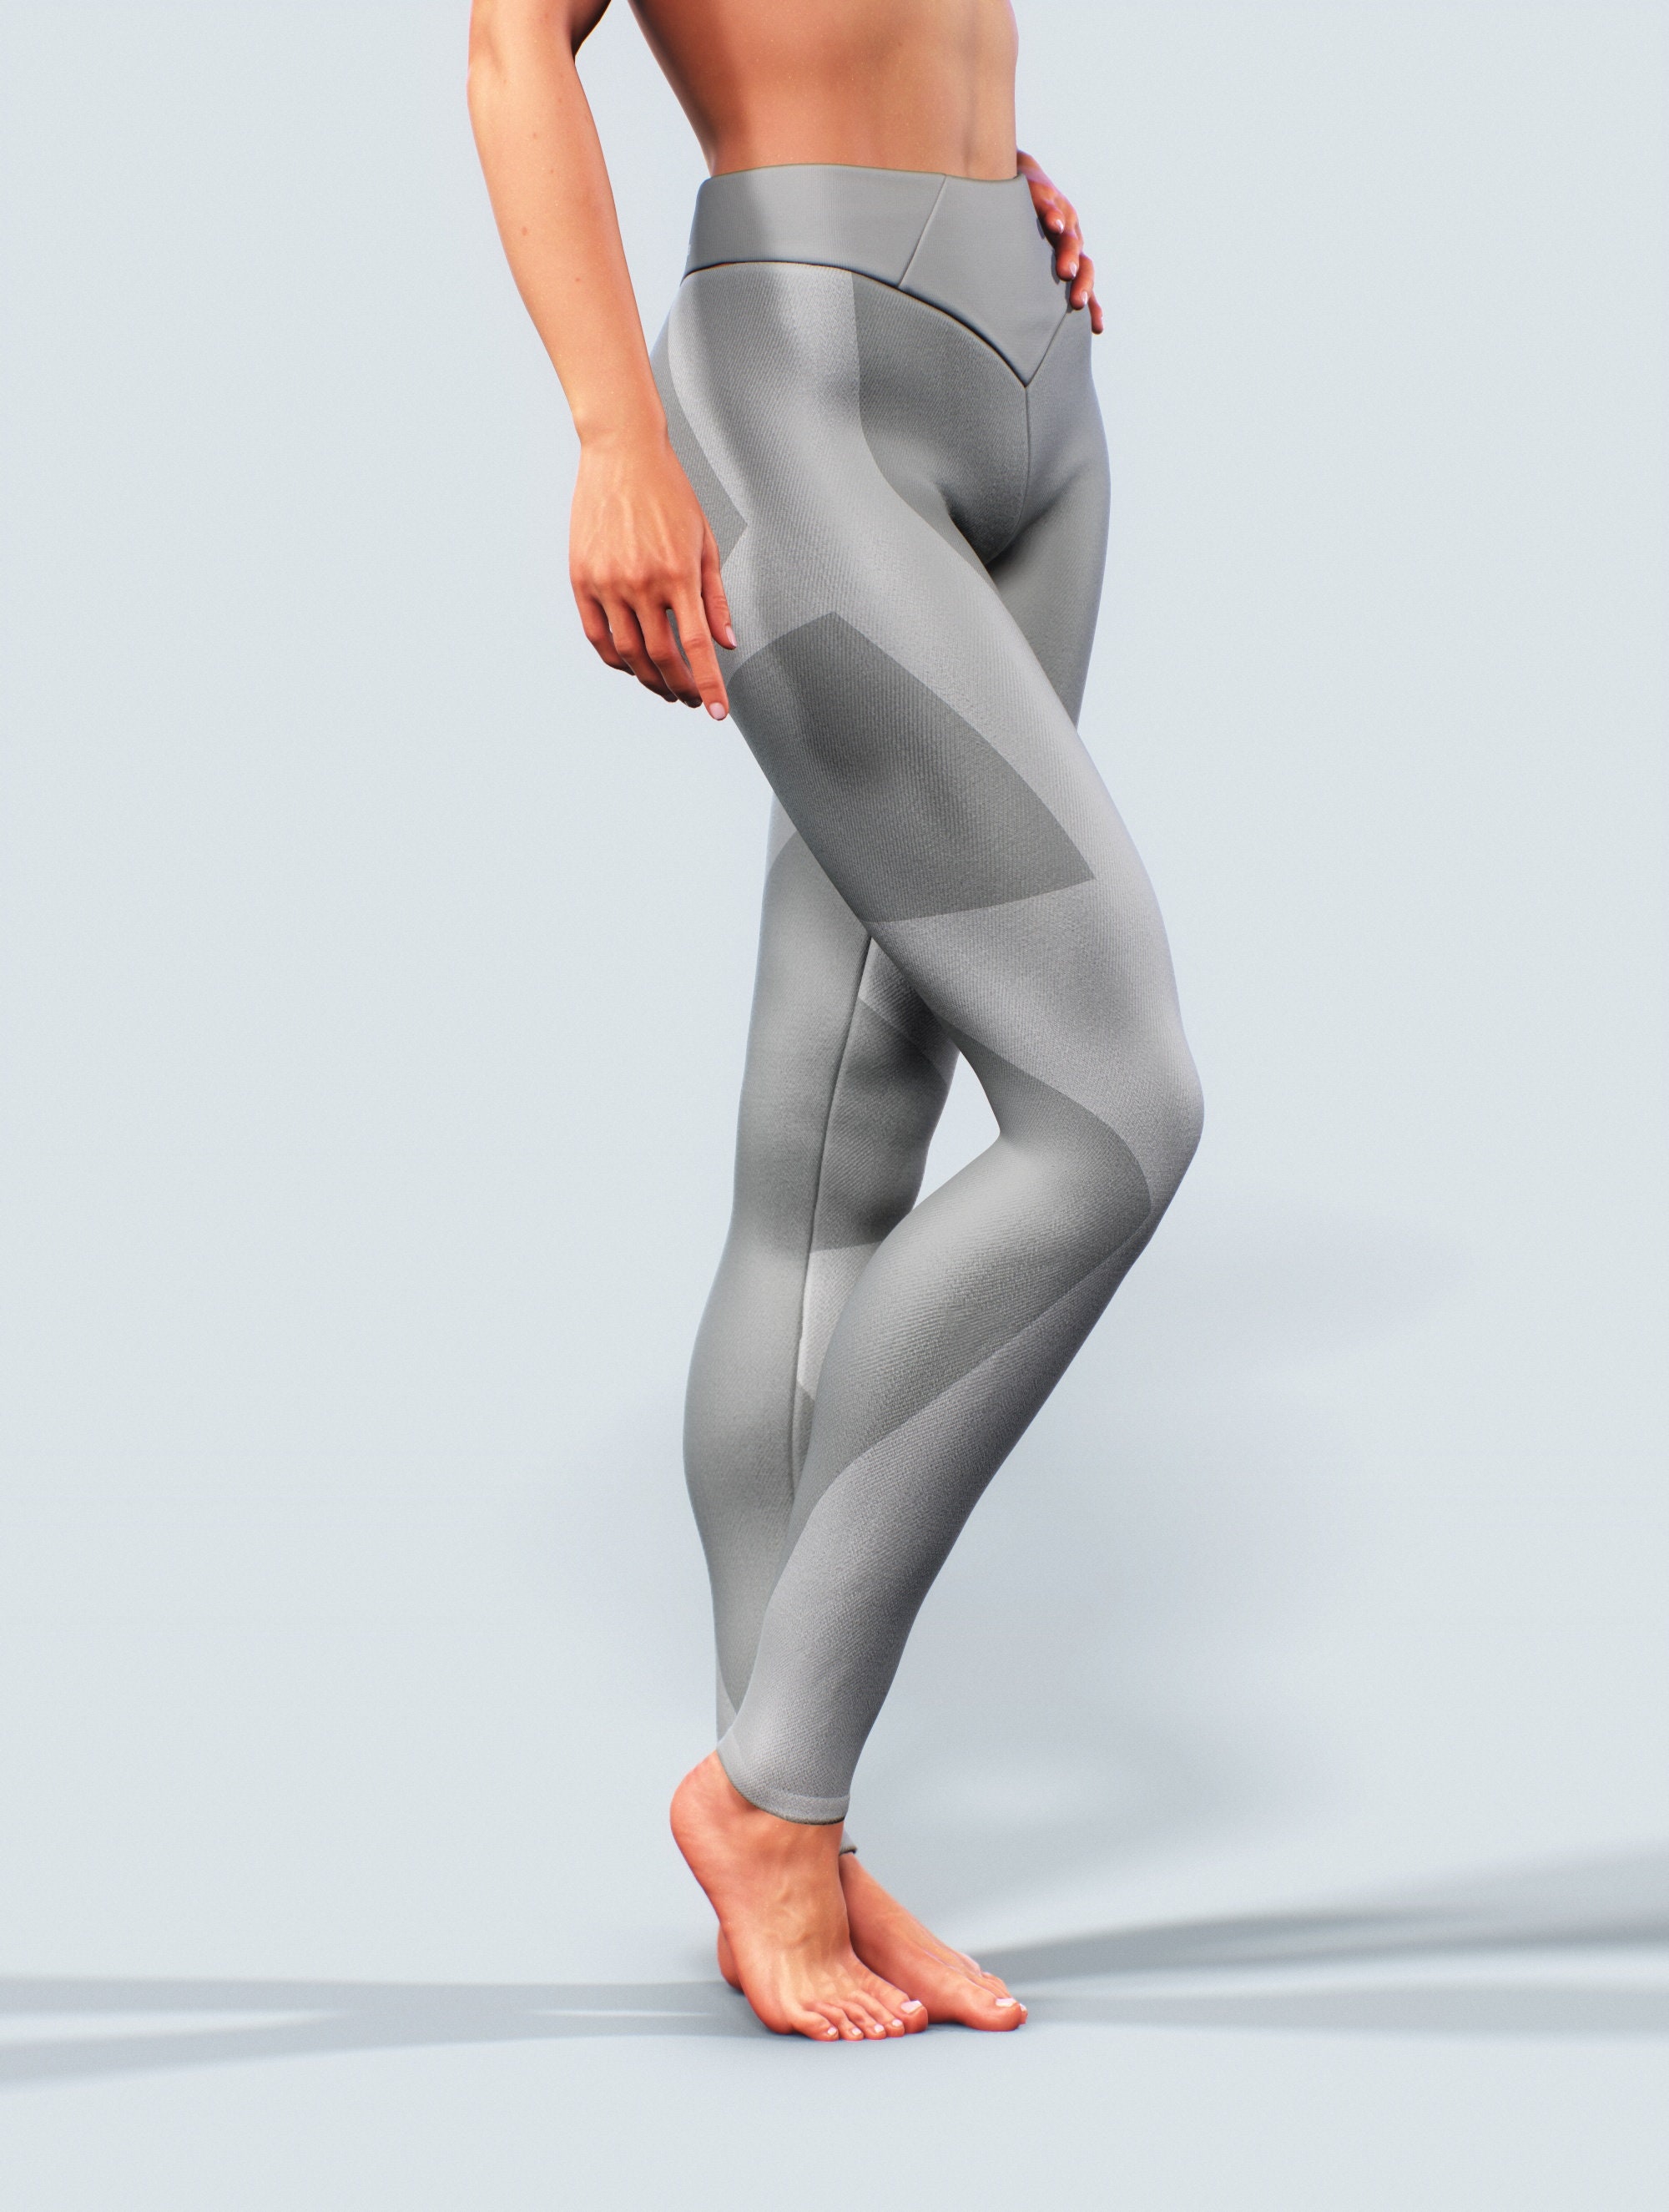 Bioactive ankle-length WR.UP® Sport sculpting fitness skinny leggings